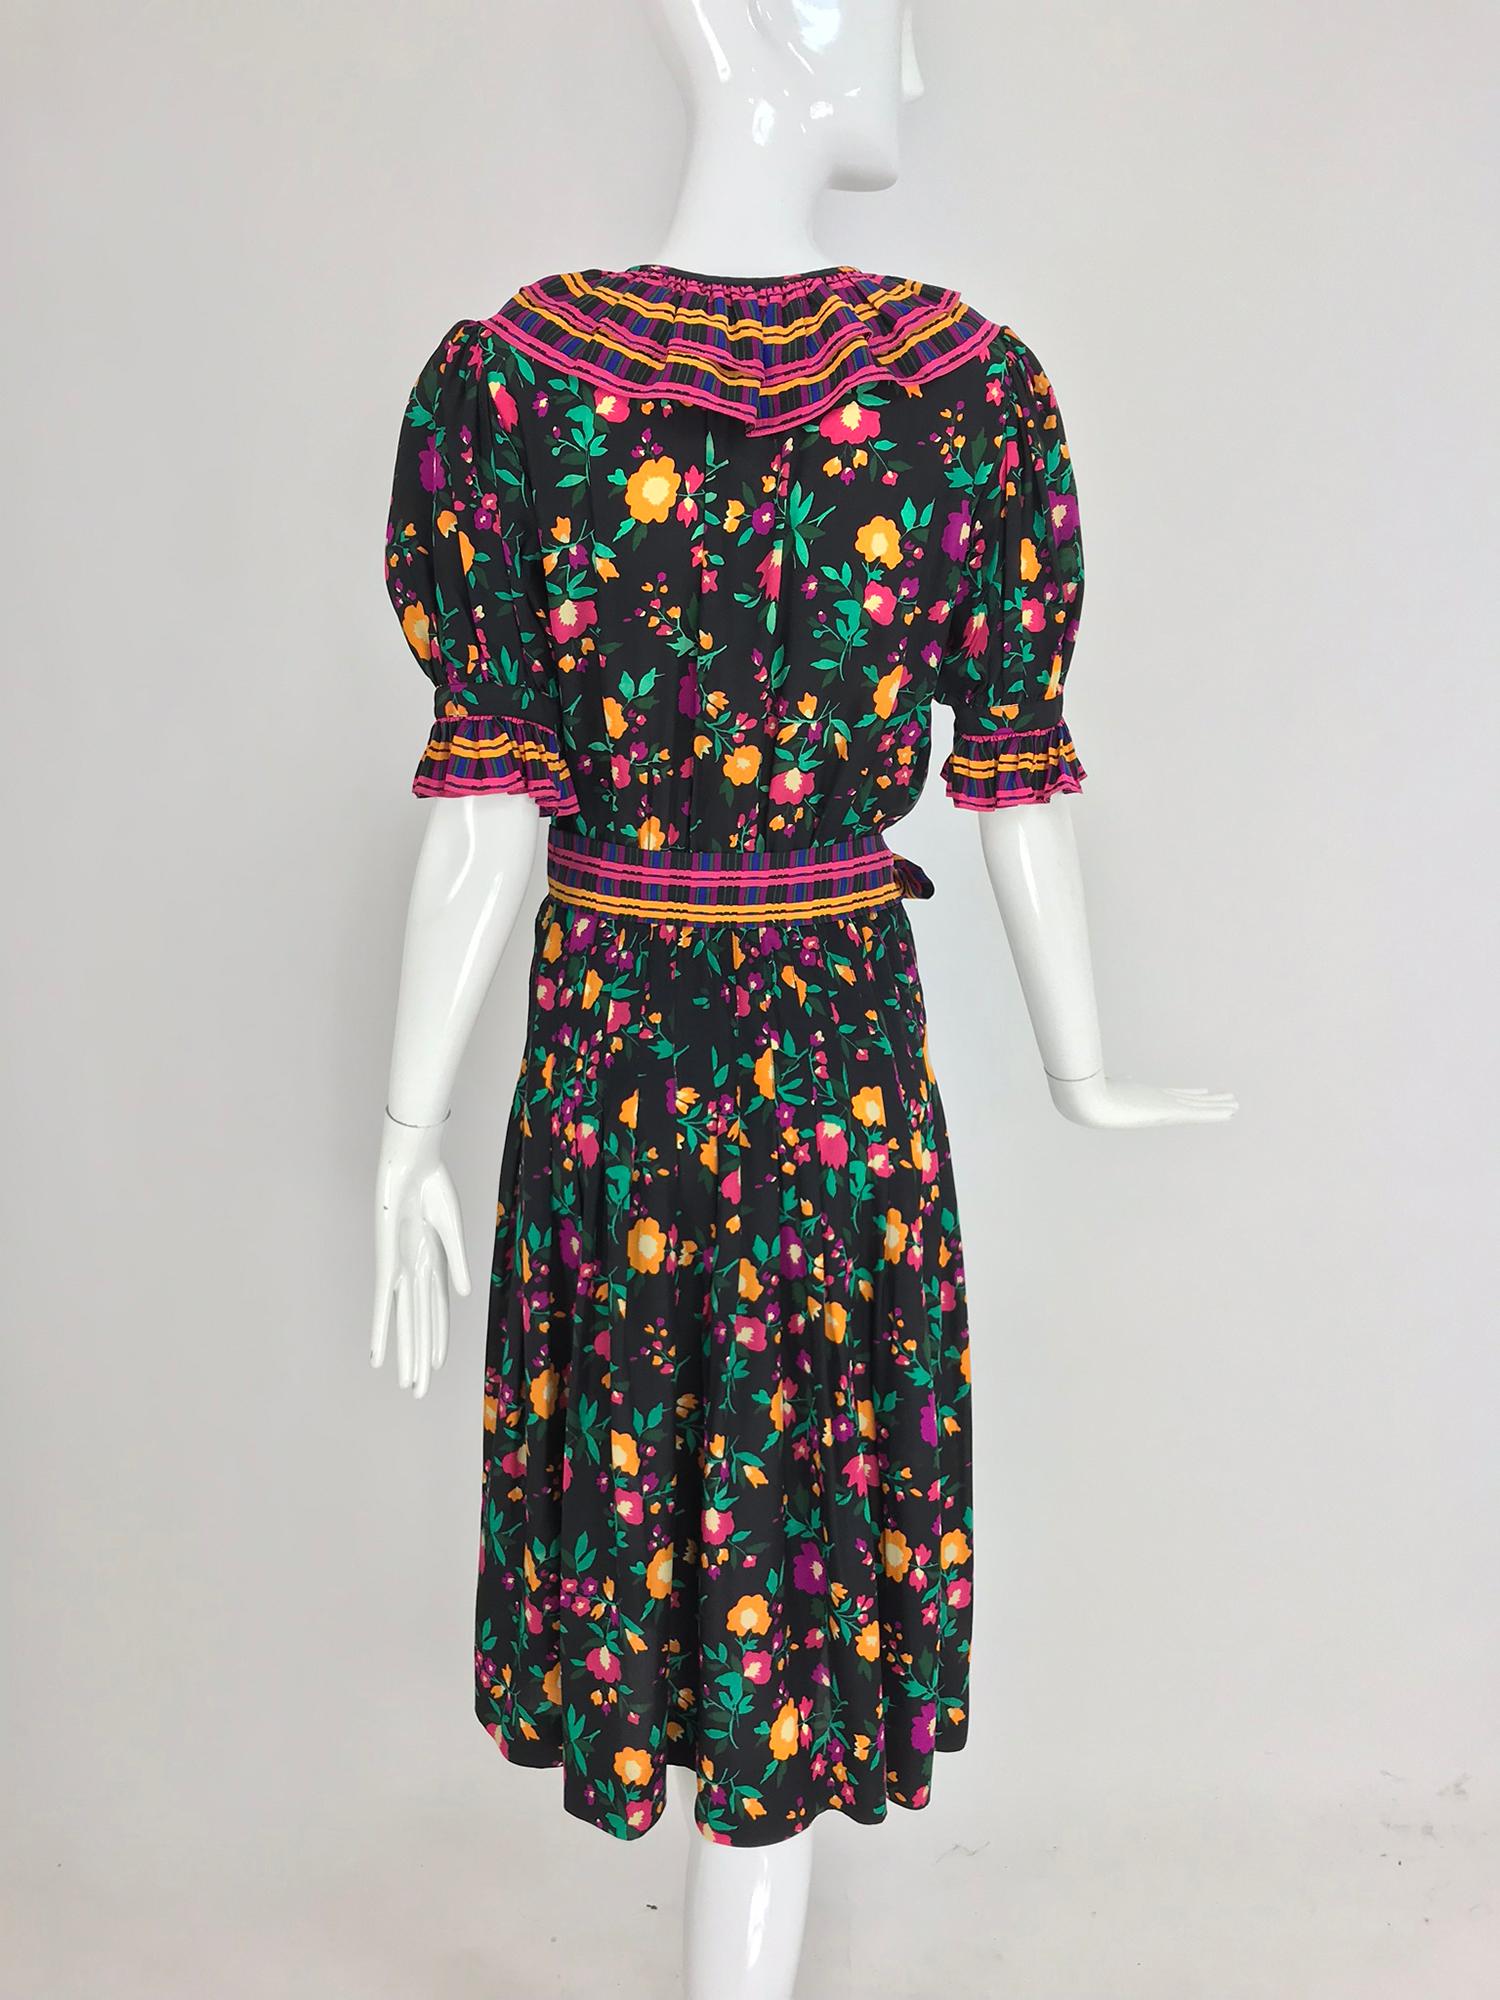 Yves Saint Laurent Rive Gauche floral silk mix print dress 1970s 2